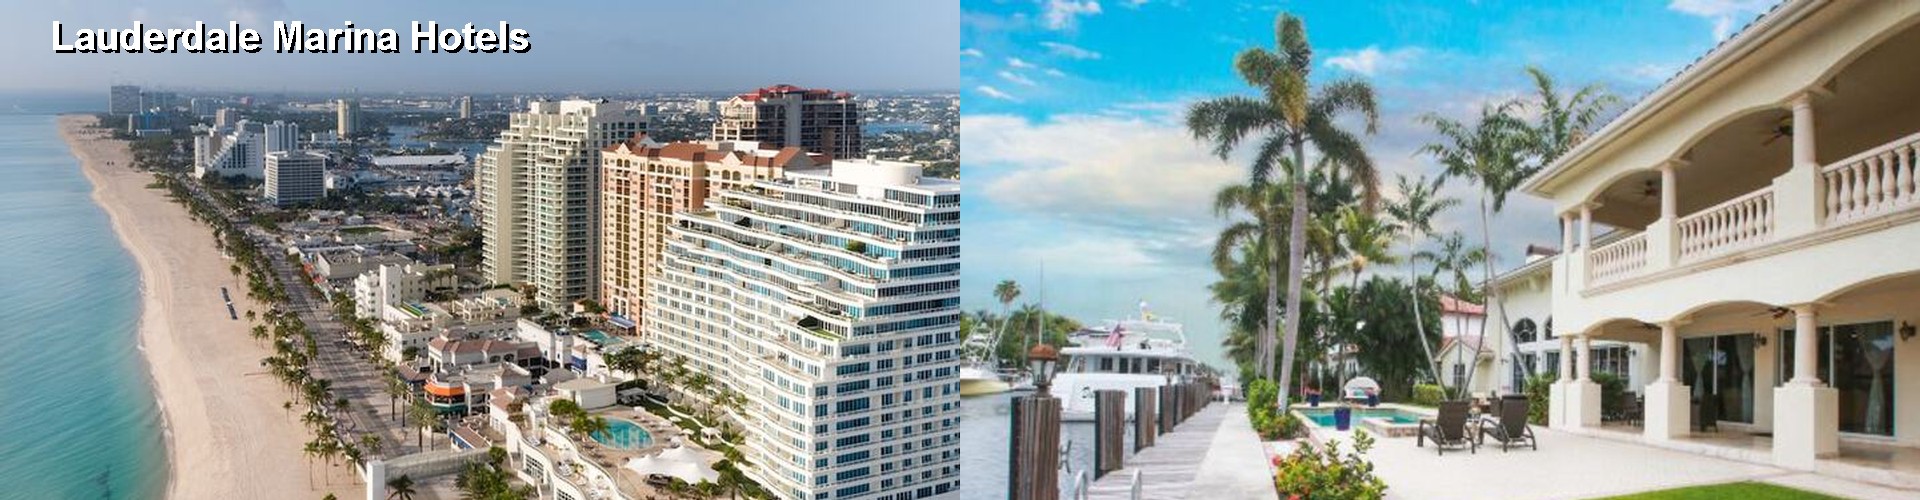 5 Best Hotels near Lauderdale Marina